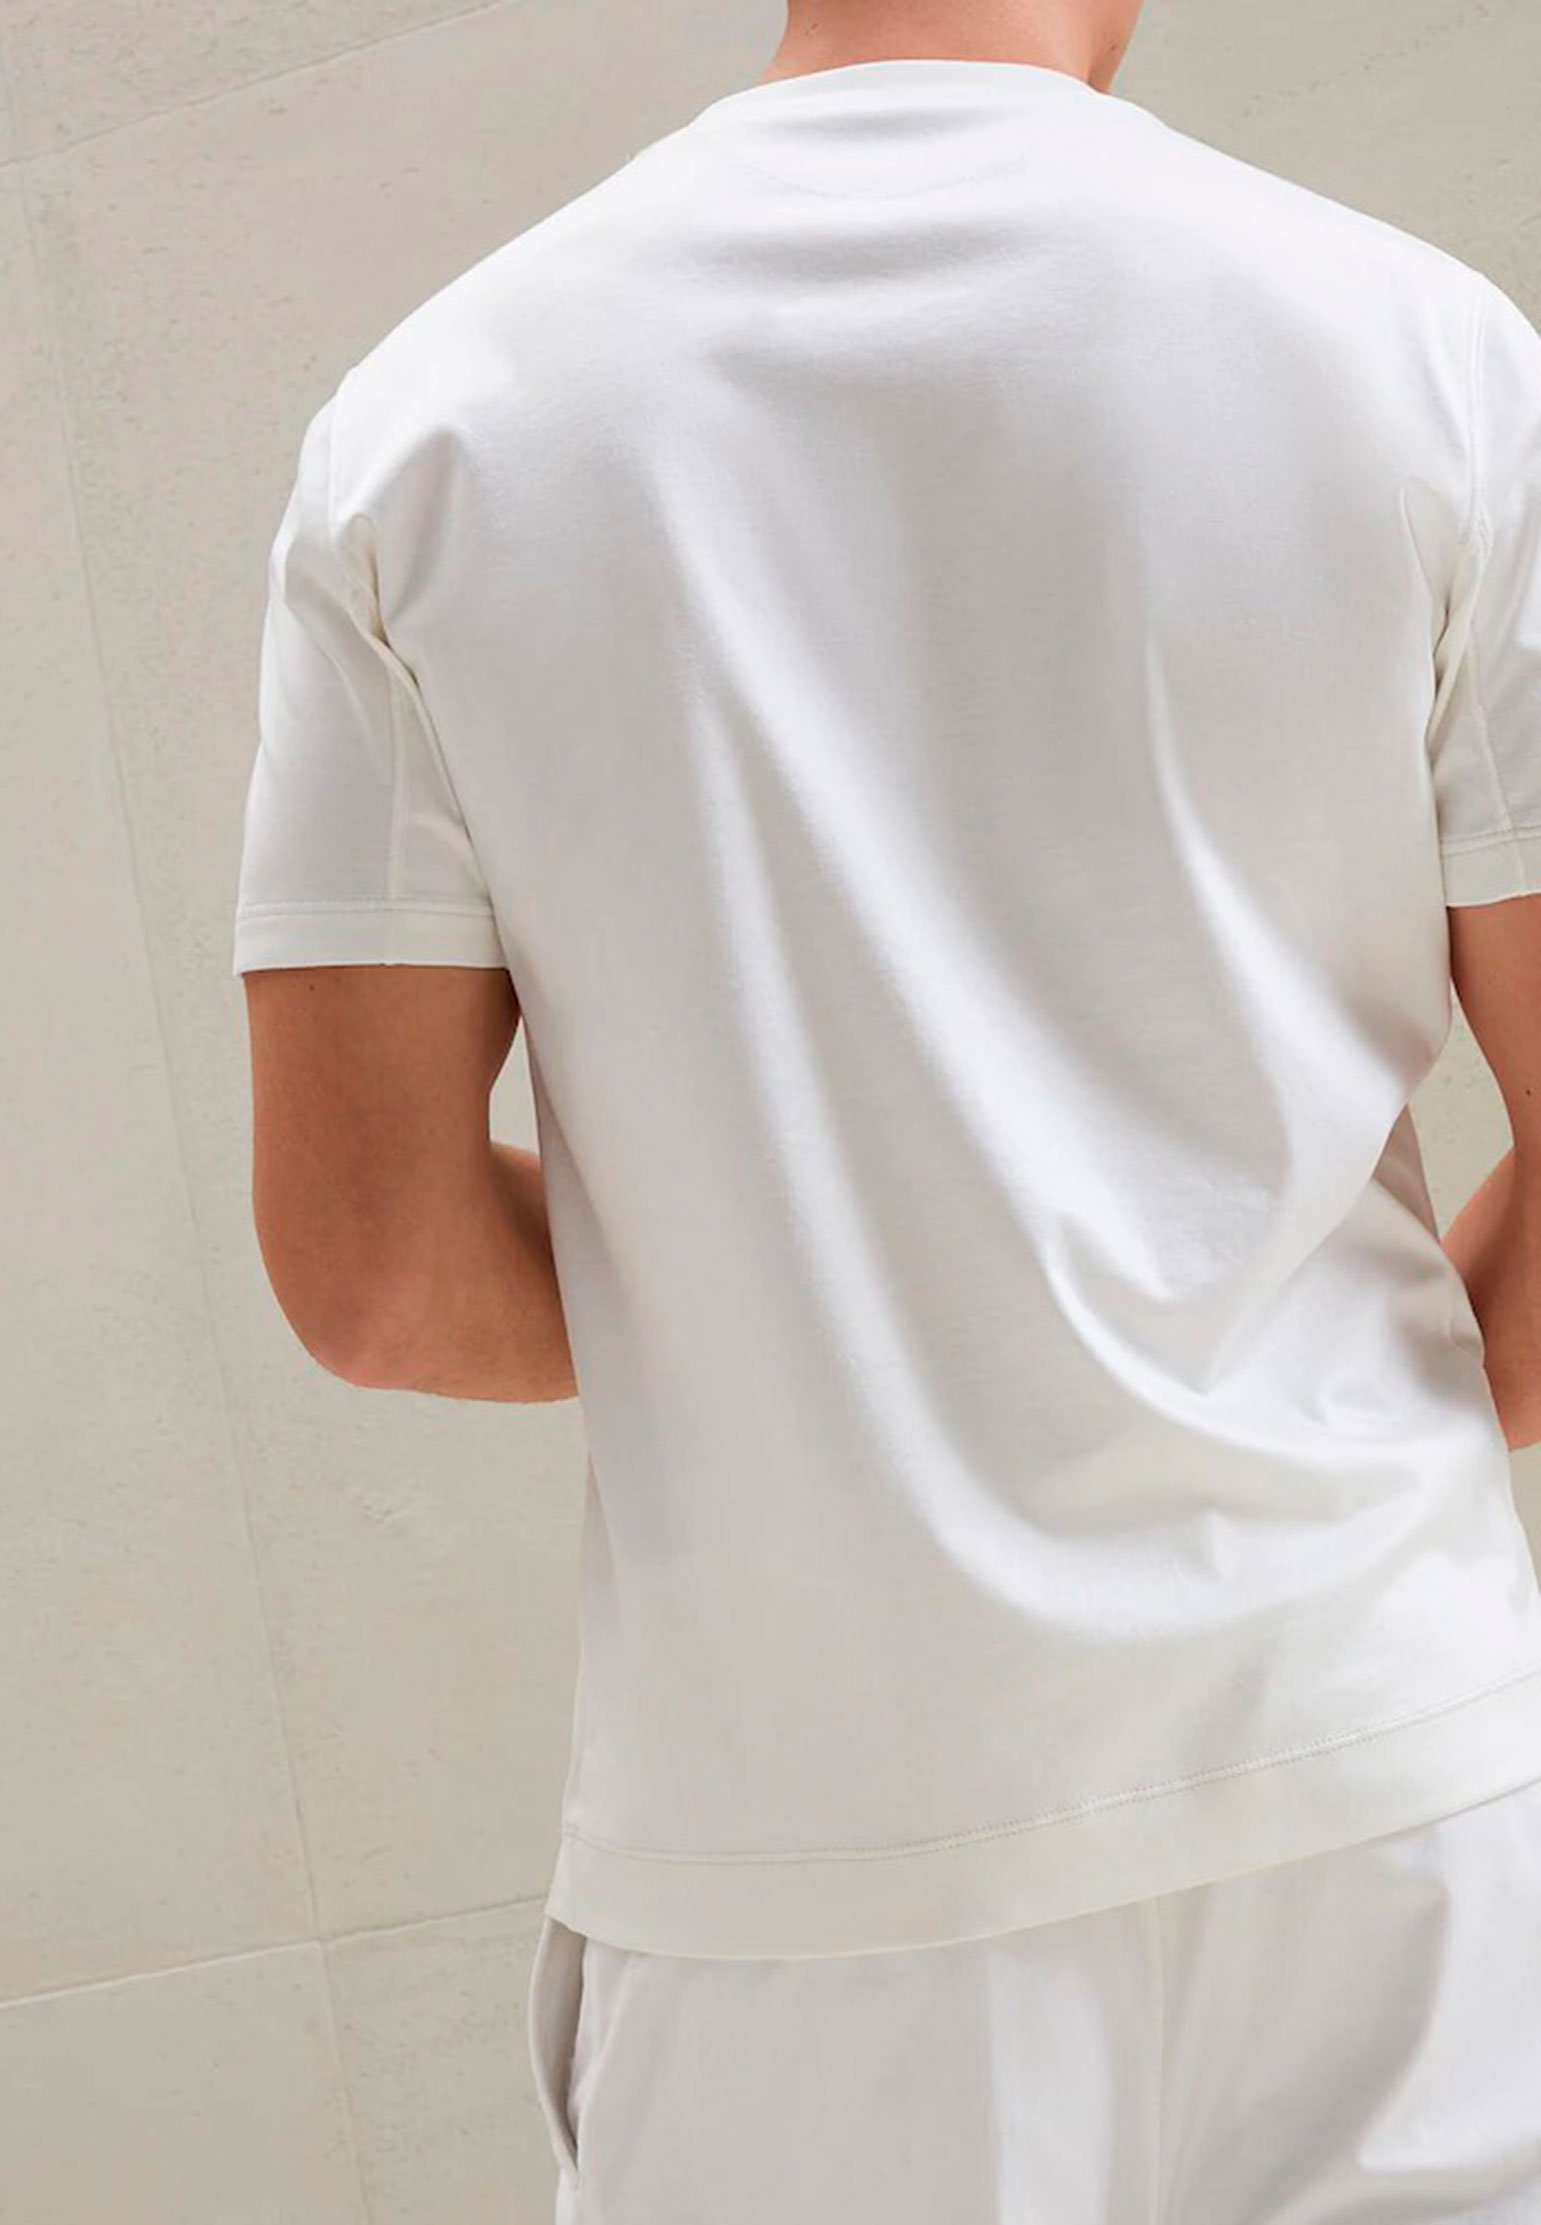 T-Shirt BRUNELLO CUCINELLI Color: white (Code: 716) in online store Allure